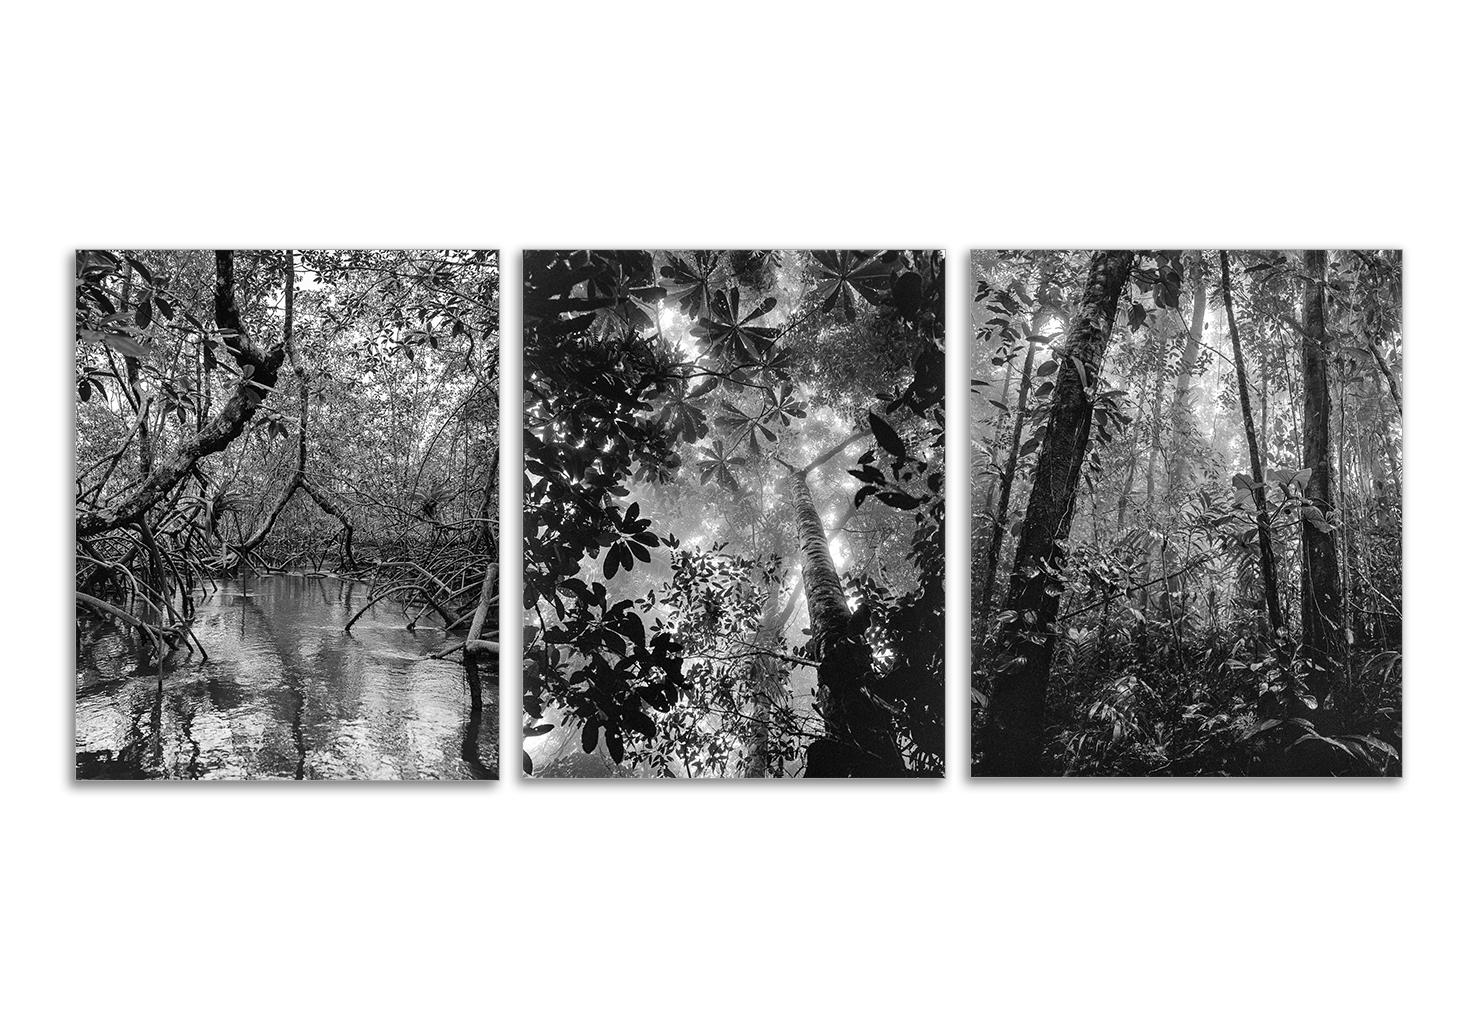 Miguel Winograd  Black and White Photograph - Manglar Nuquí, Bosque Tropical Húmedo Nuqui I & II (Triptych) Pigment Prints